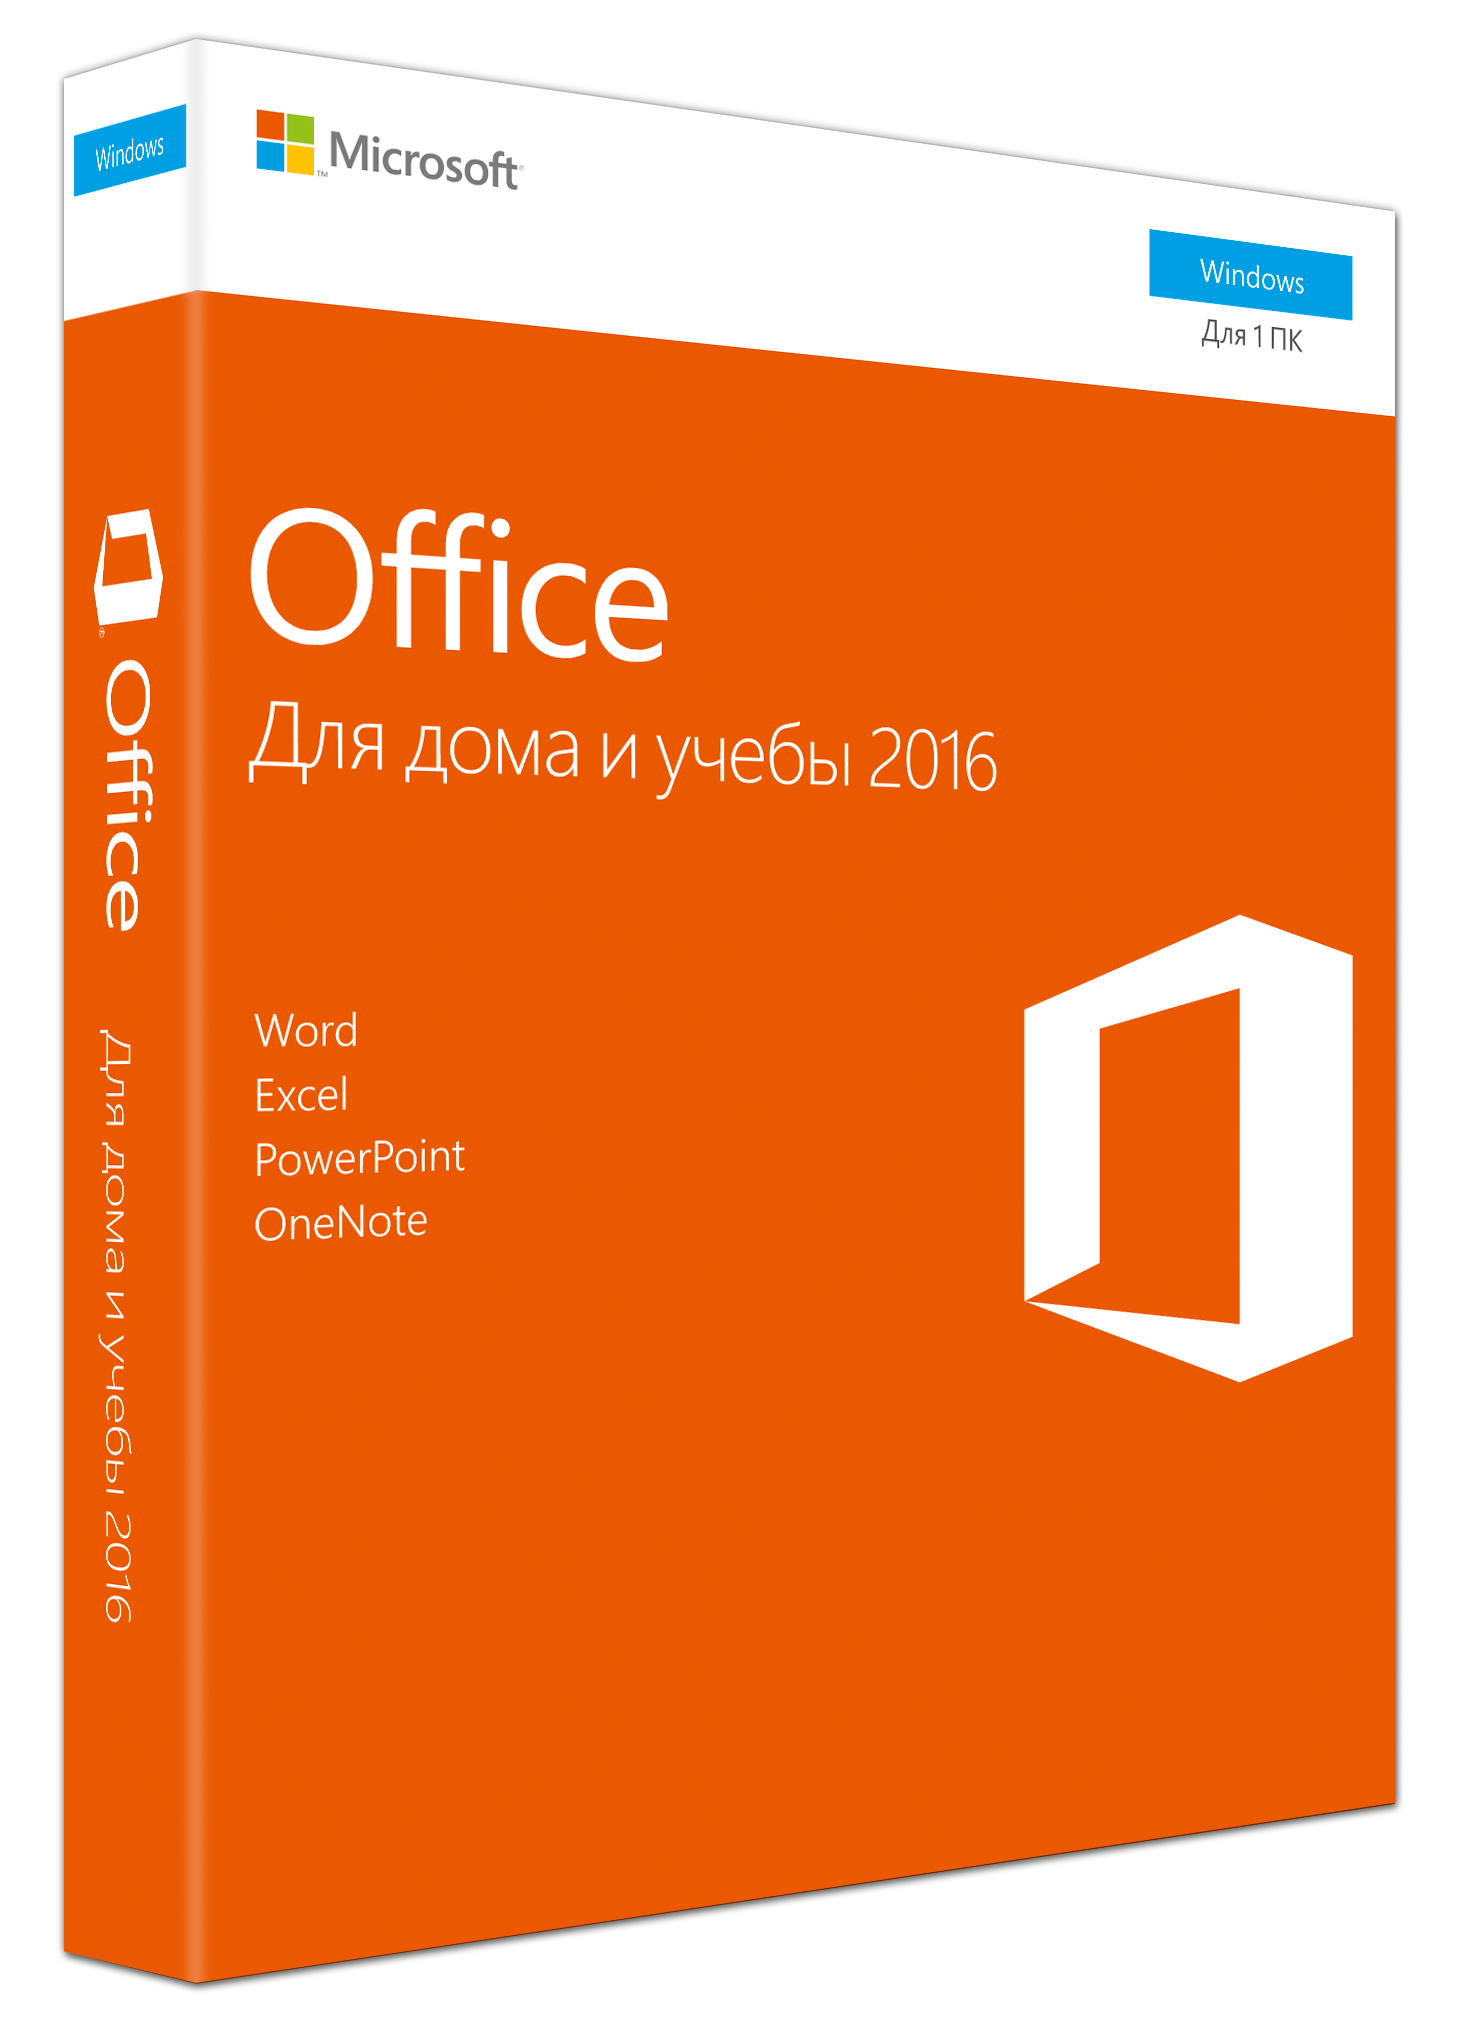 Офис 2016. Microsoft Office 2016 Home and Business. Office 2016 Home and Business Mac. Microsoft Office программное обеспечение. Microsoft Office для дома и учебы 2016.